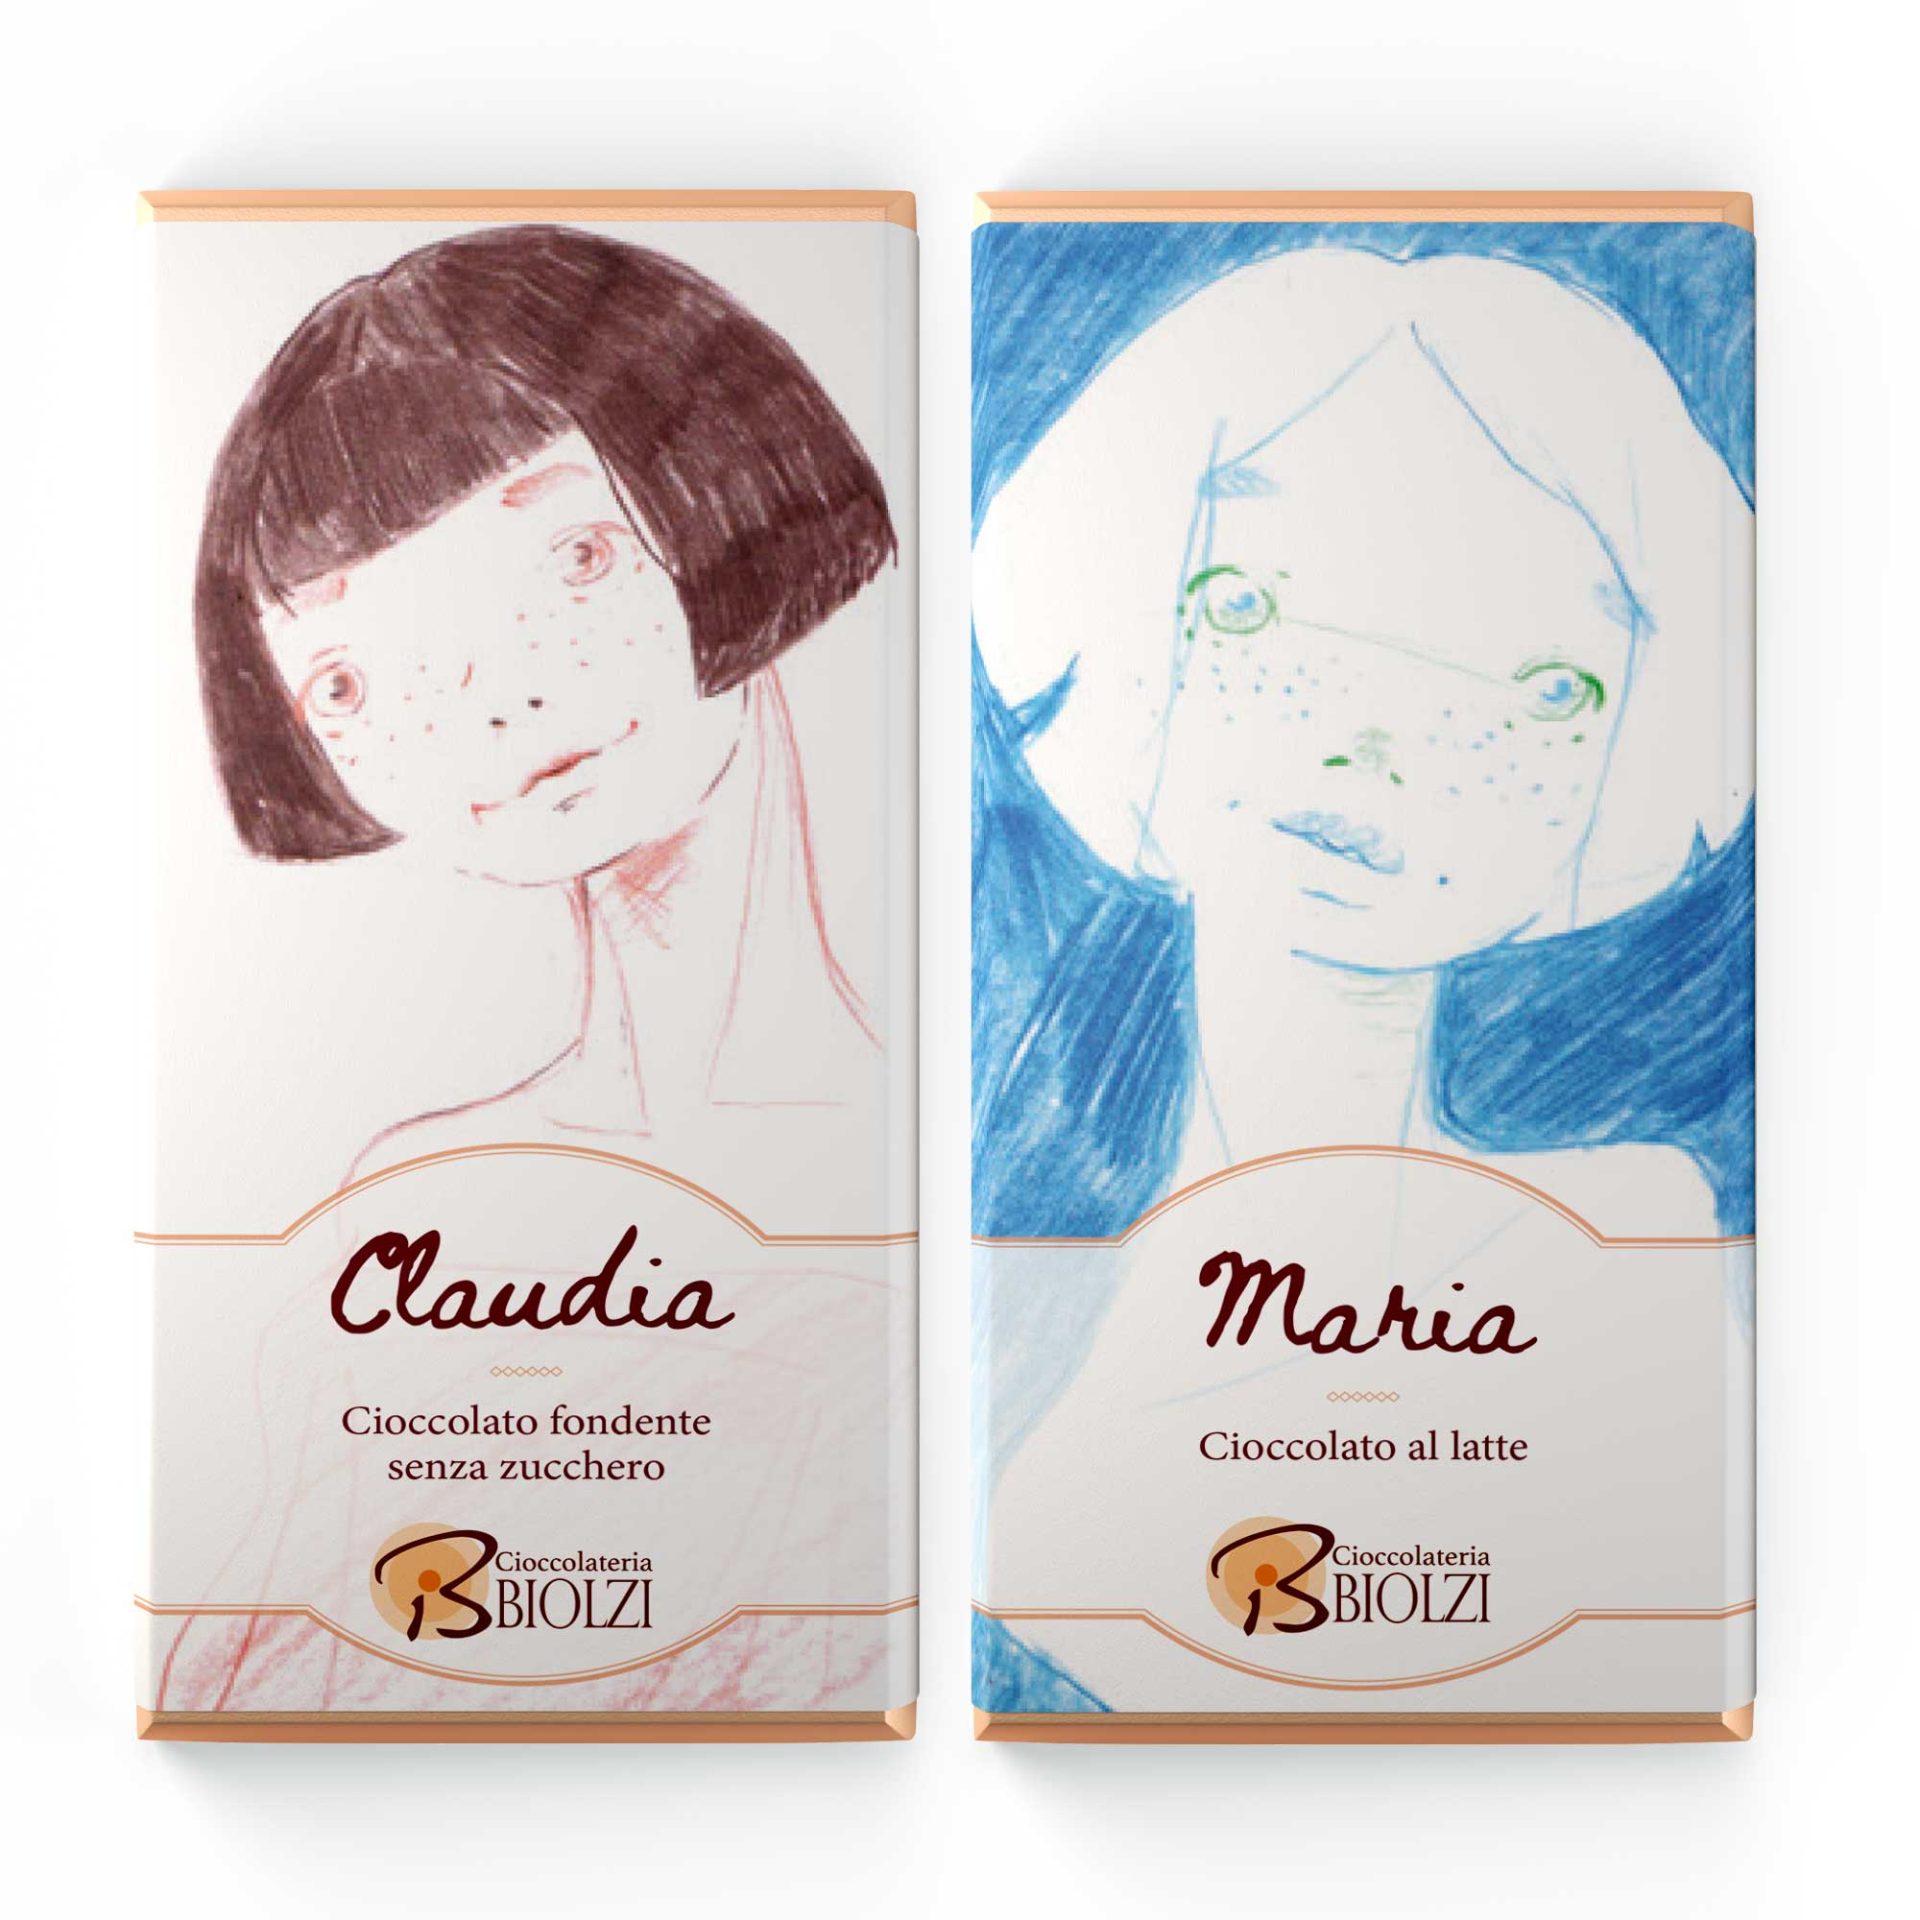 Packaging d'artista - Diego Gabriele per Cioccolateria Biolzi